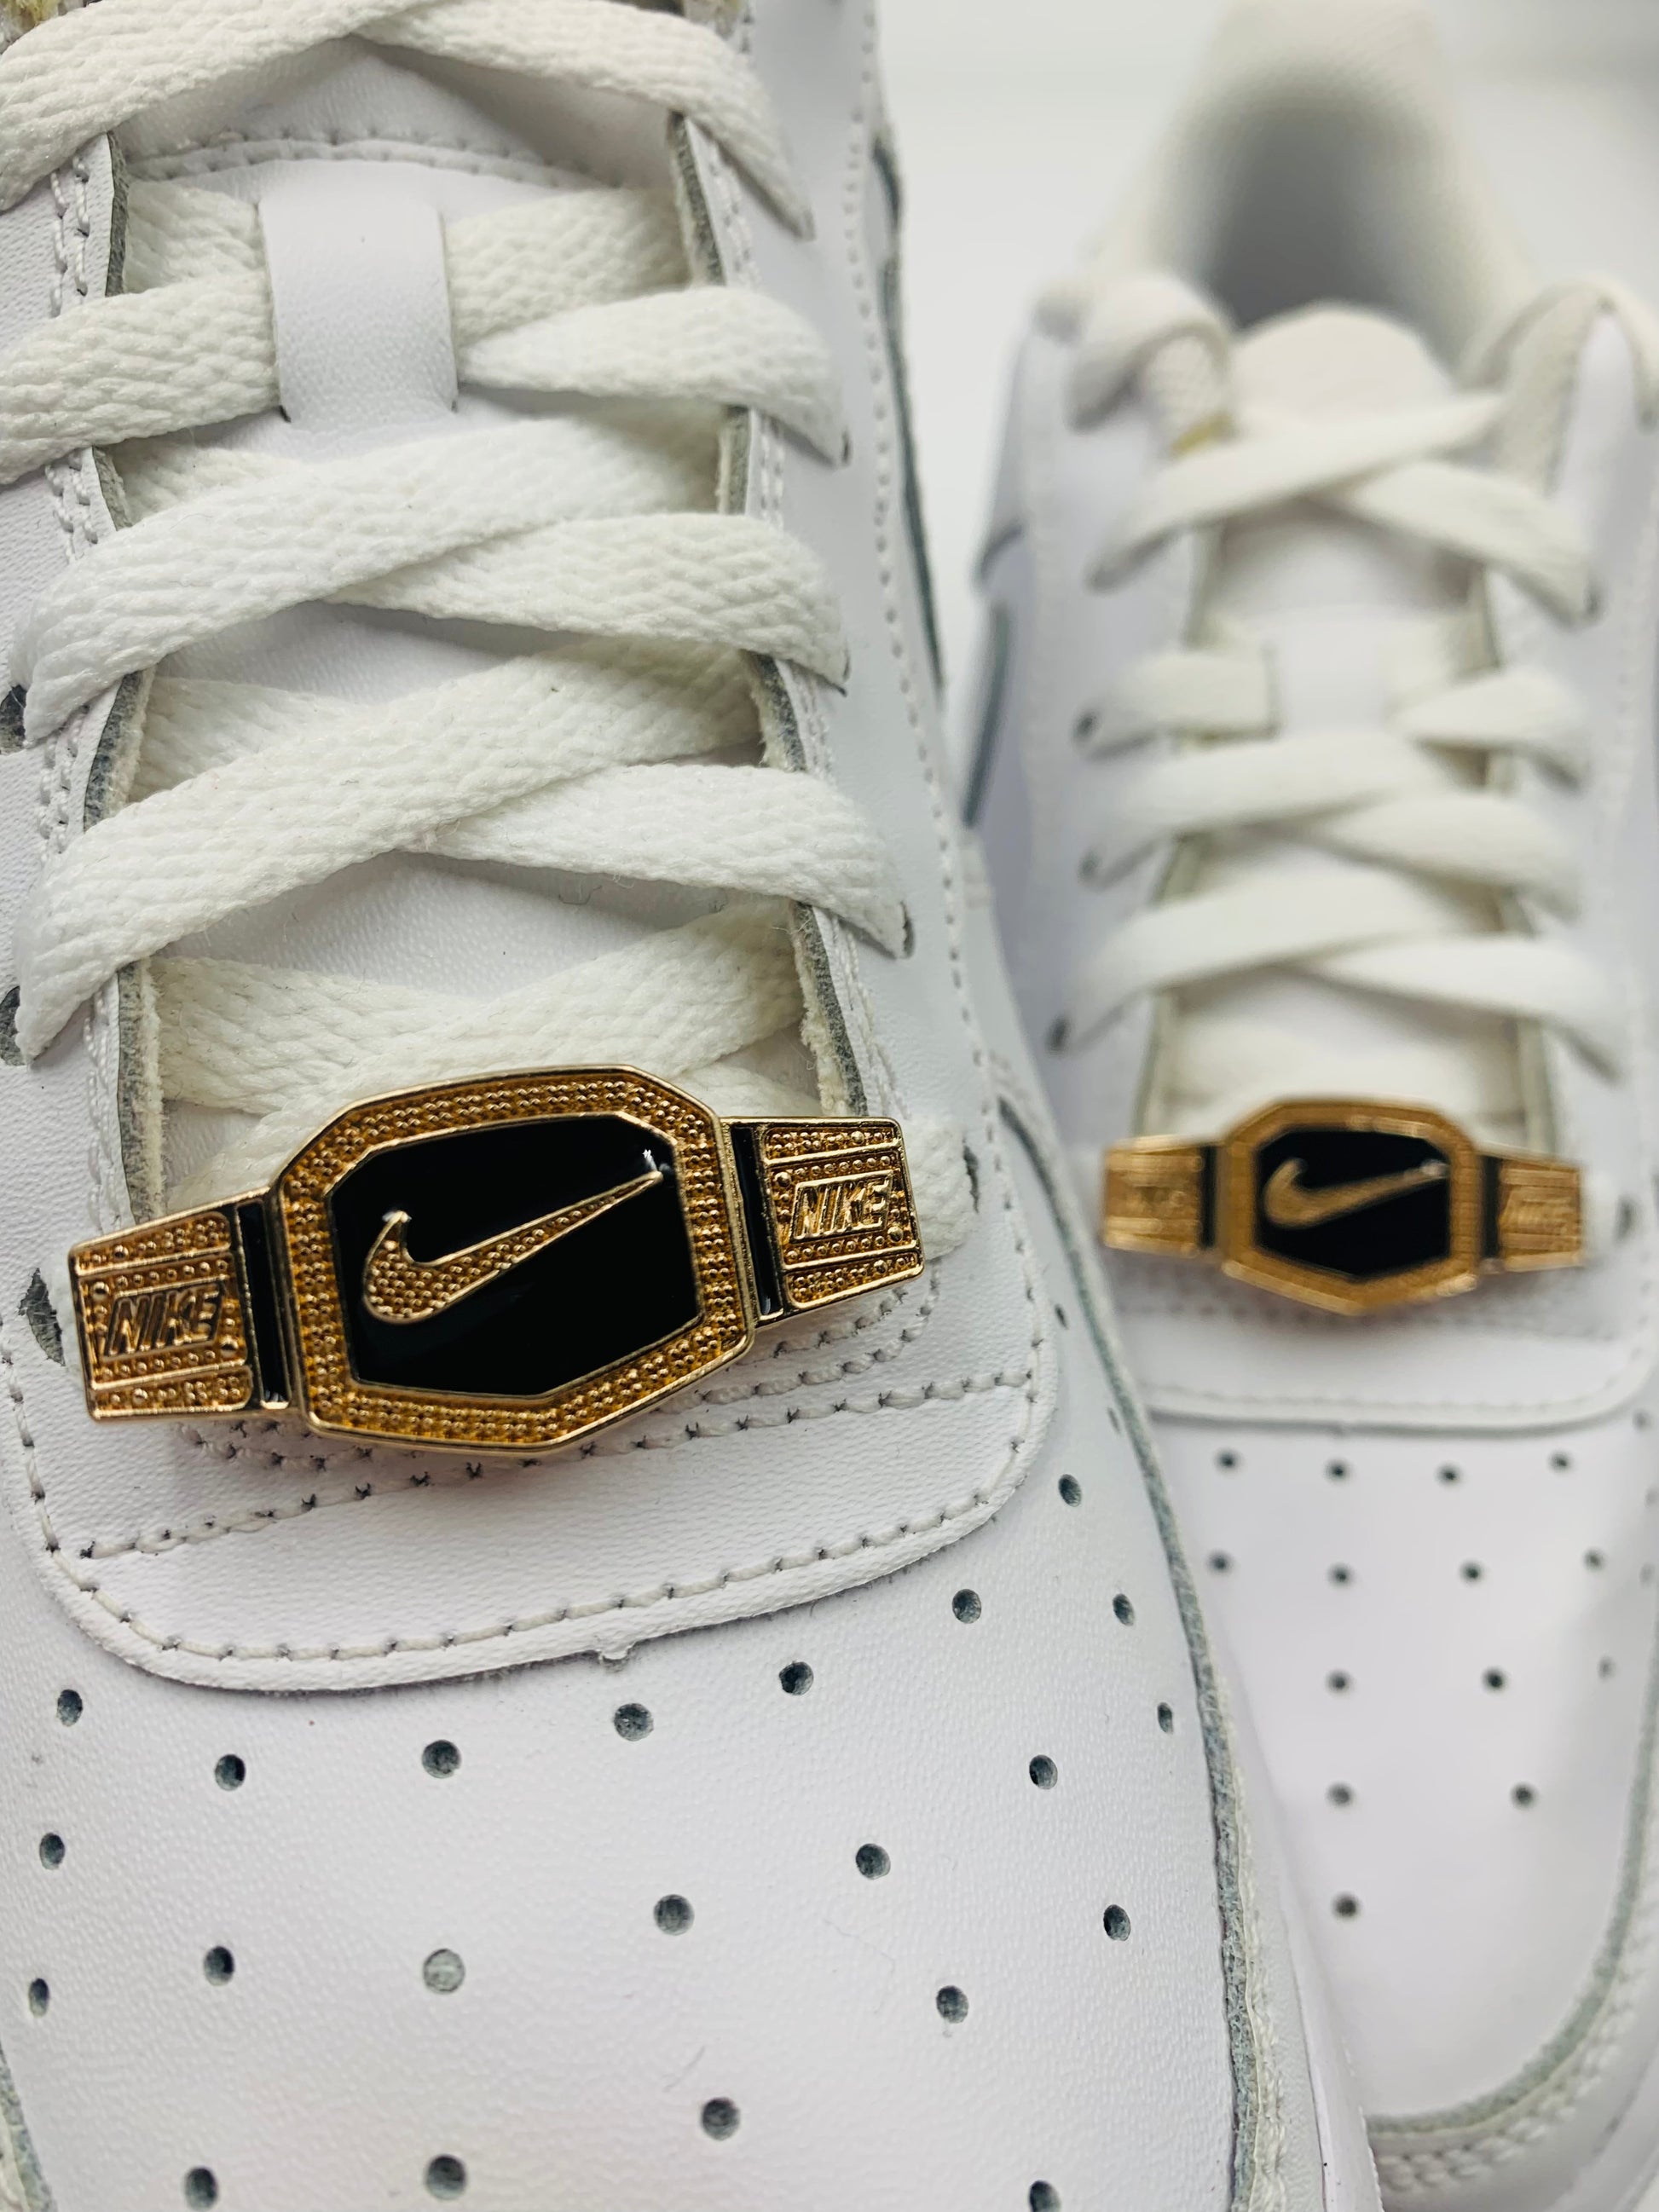 Silver Air Jordan Charms Nike Lace Locks NO.363